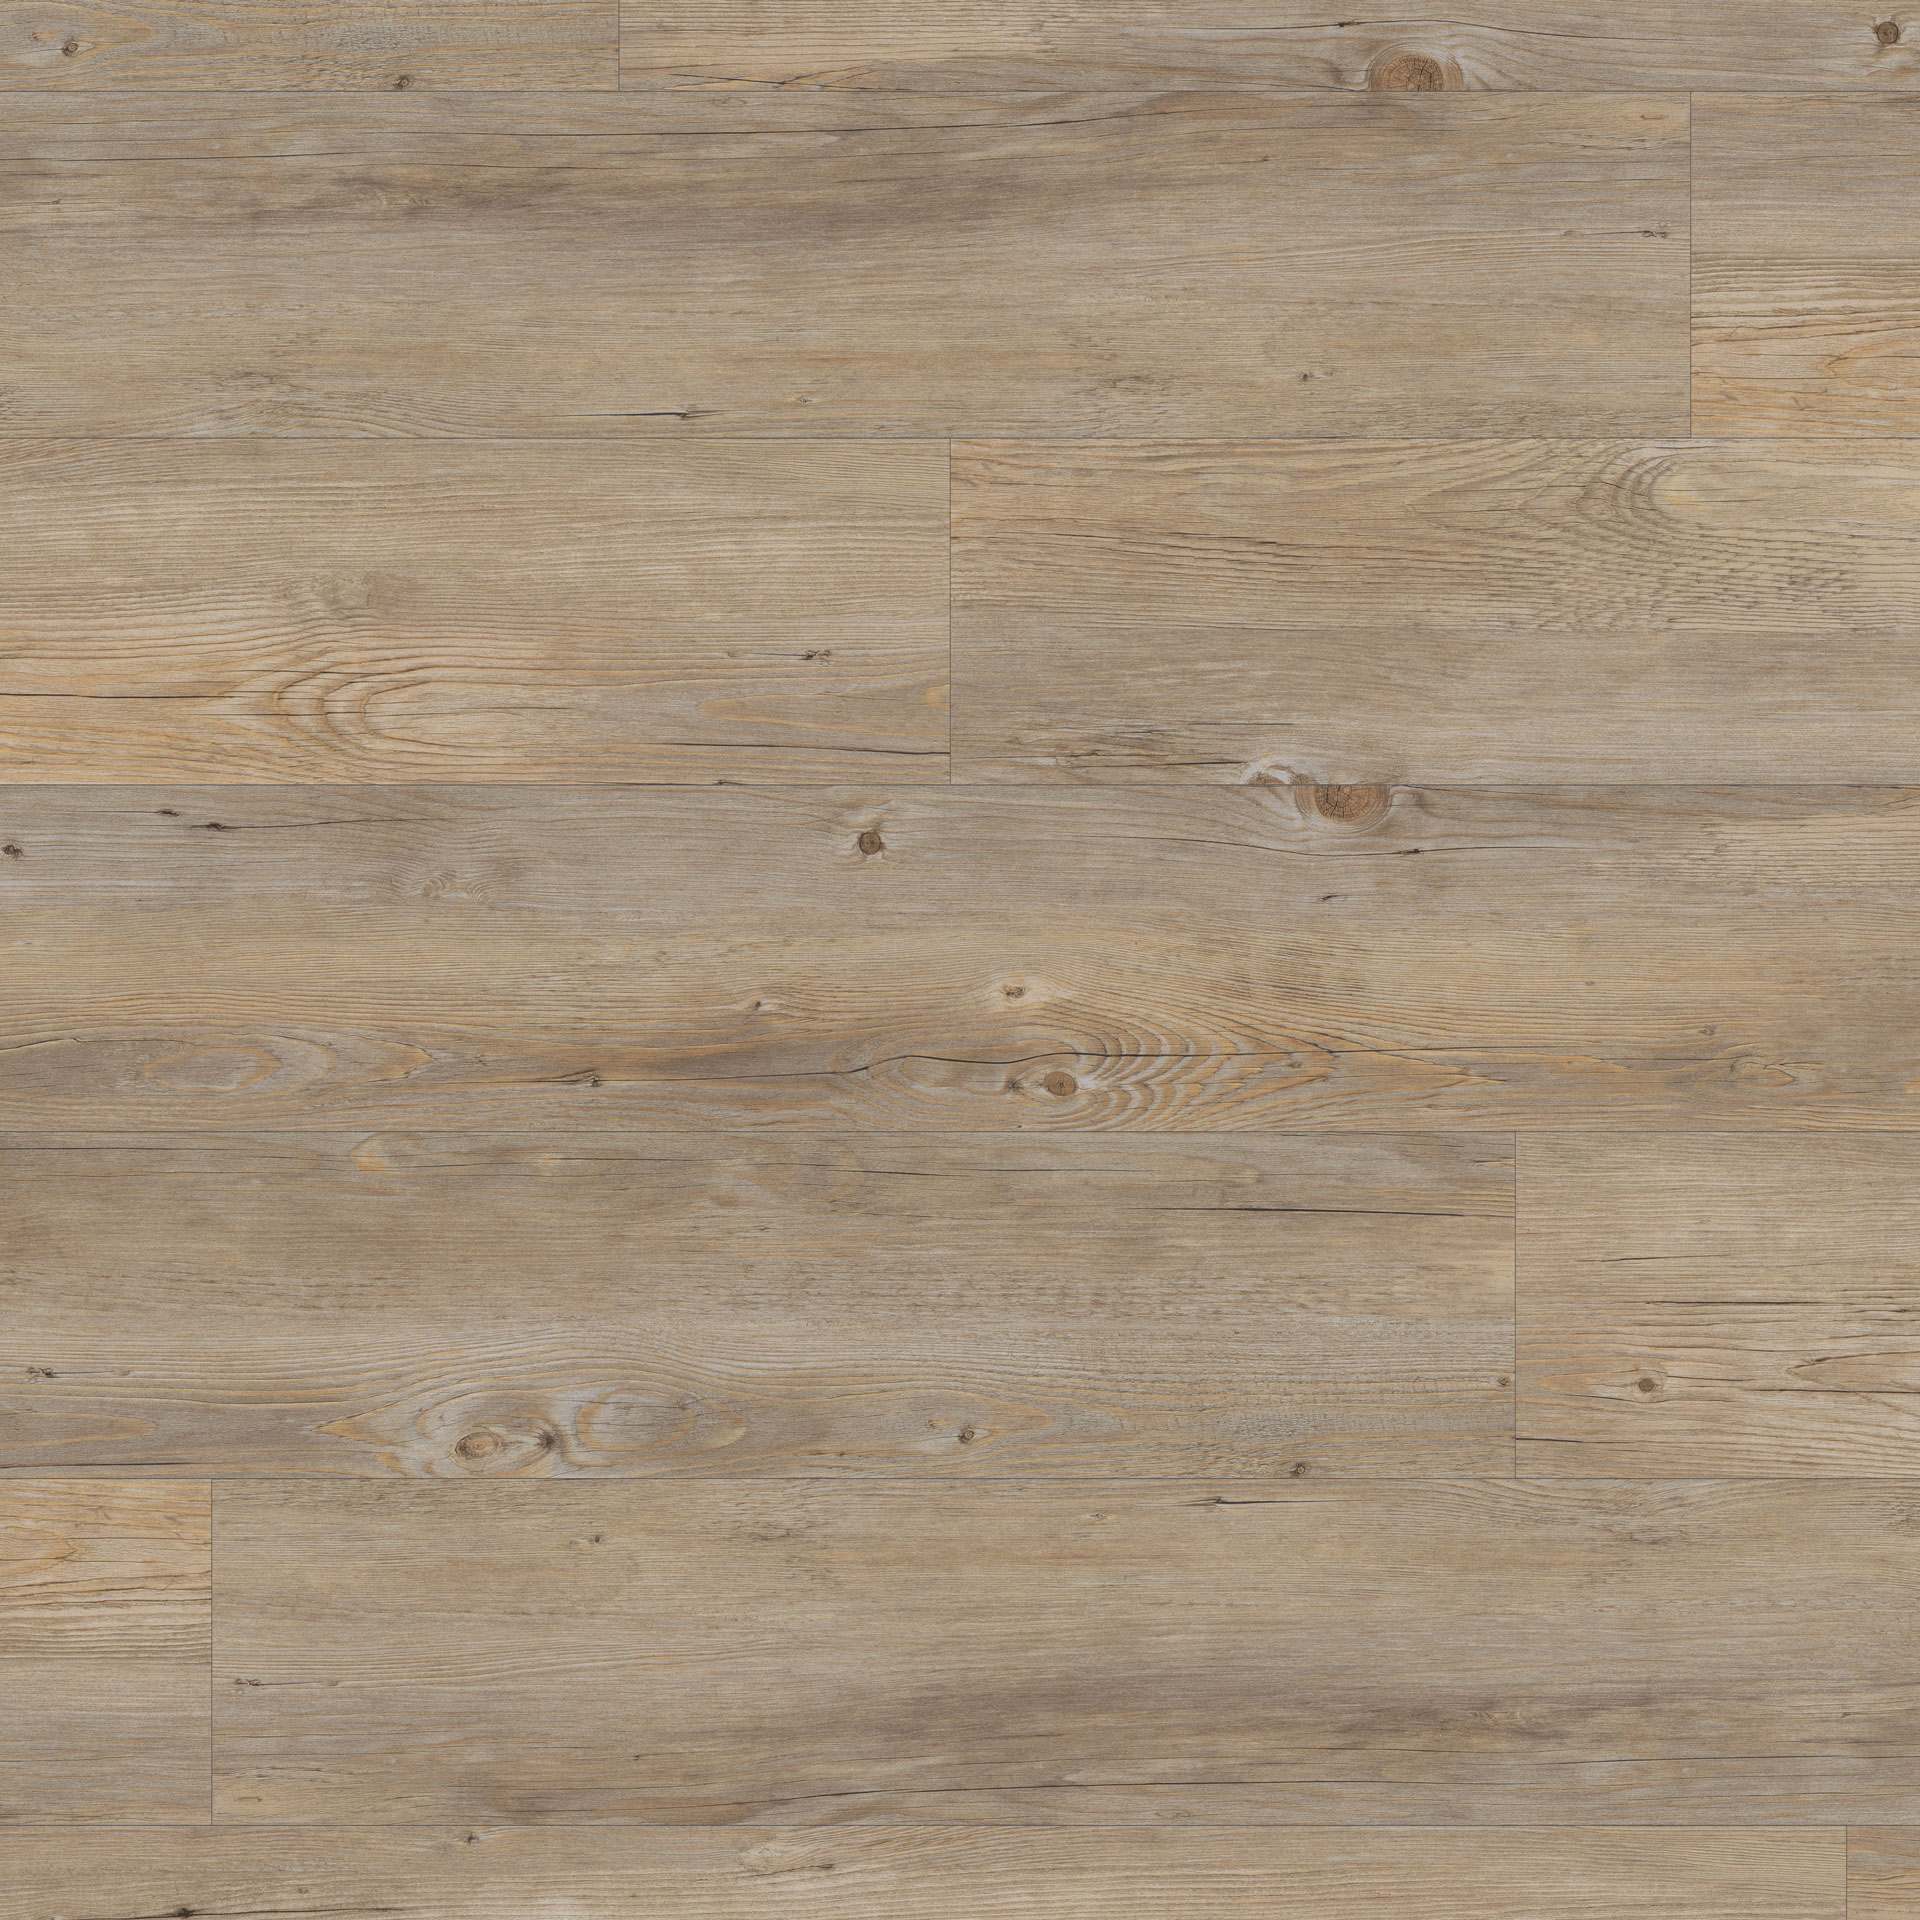 Vgw81t Country Oak Wood Flooring, Karndean Russet Oak Luxury Vinyl Flooring